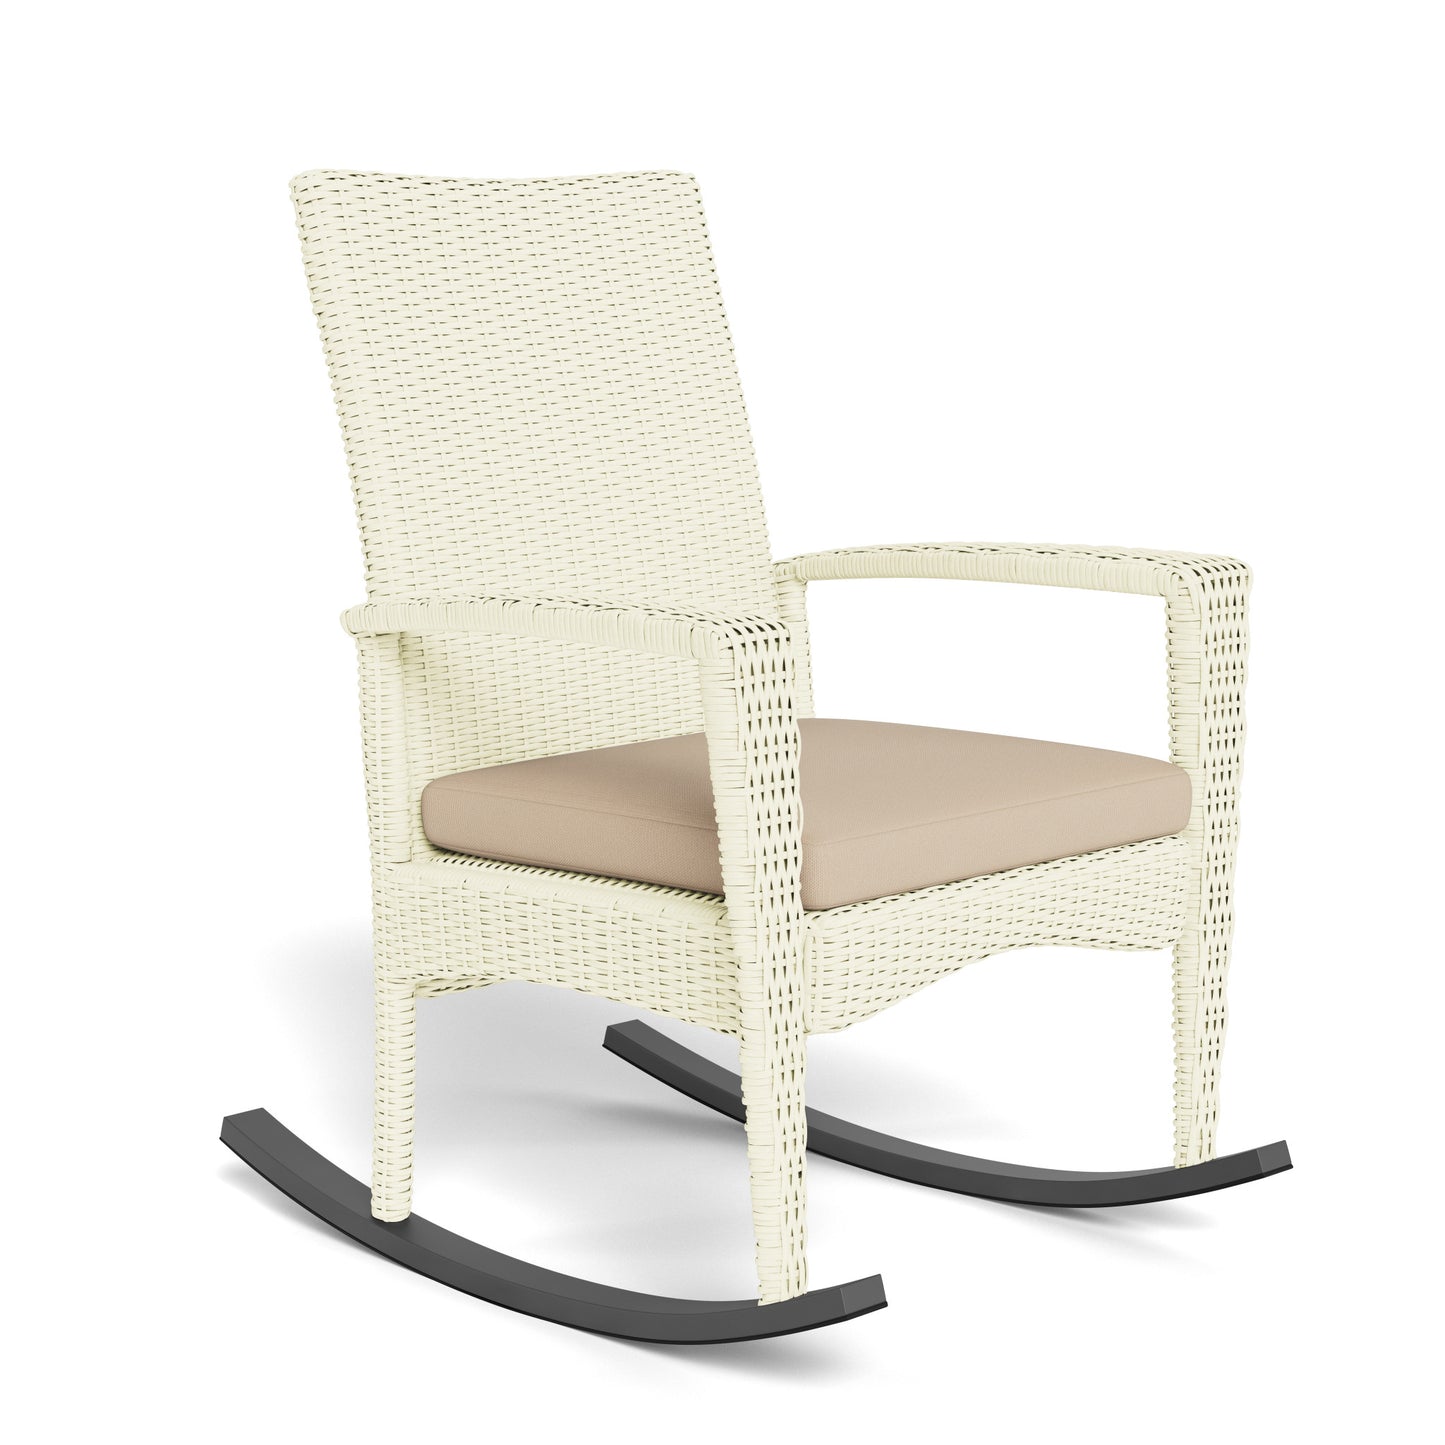 Bayview Rocking Chair - Magnolia